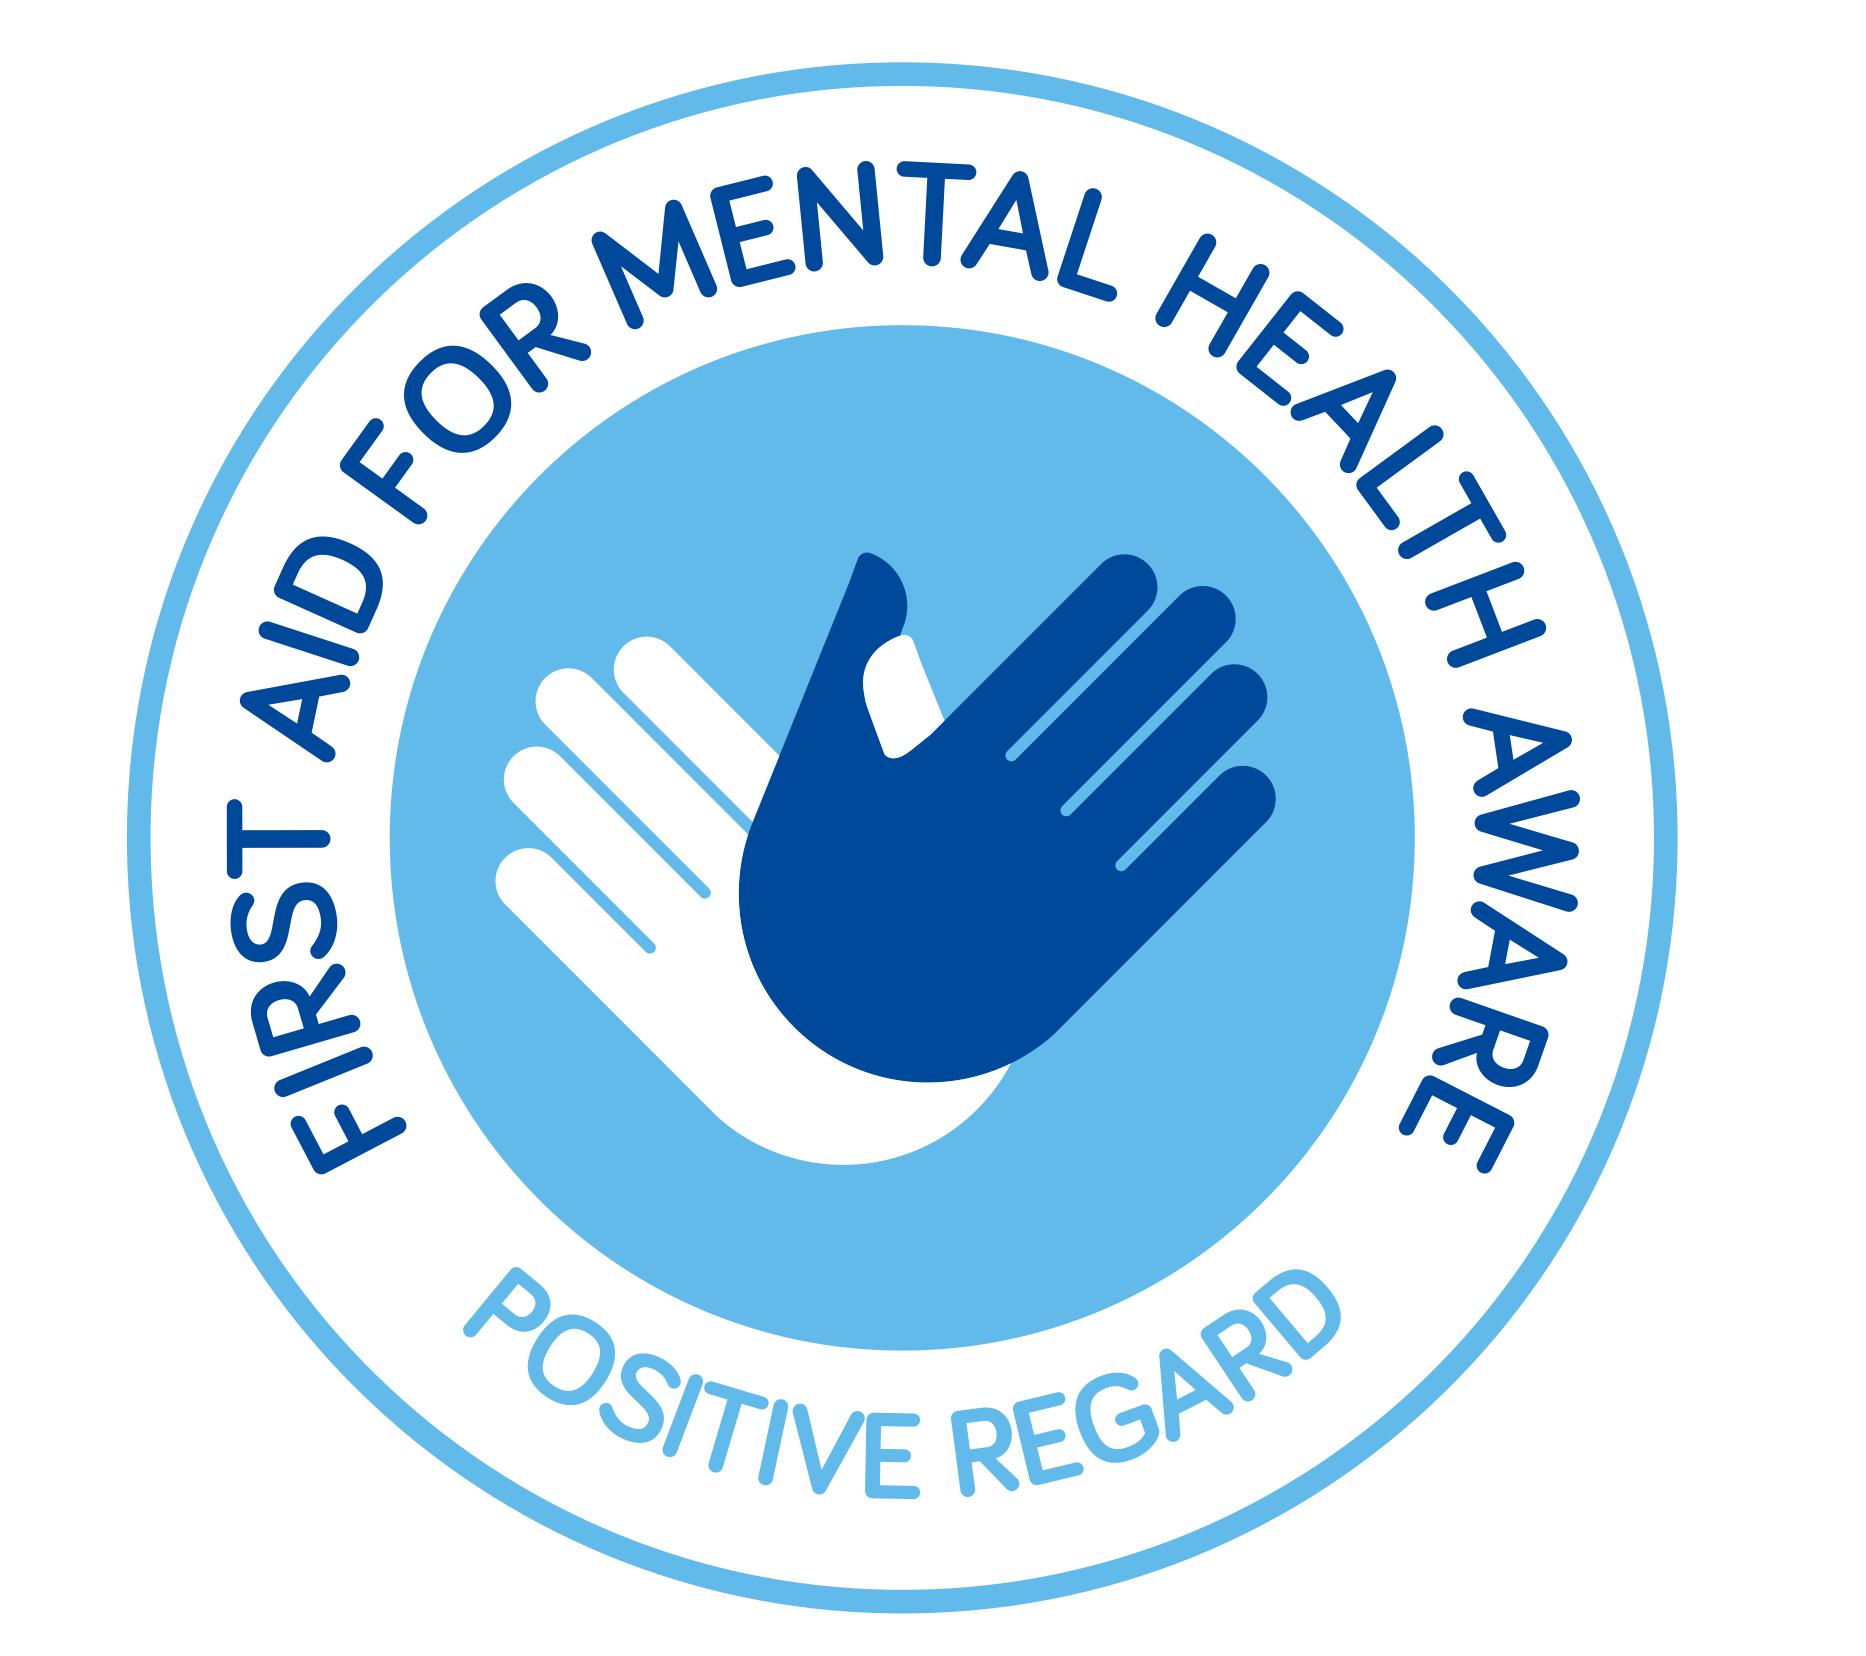 Mental Health Badge